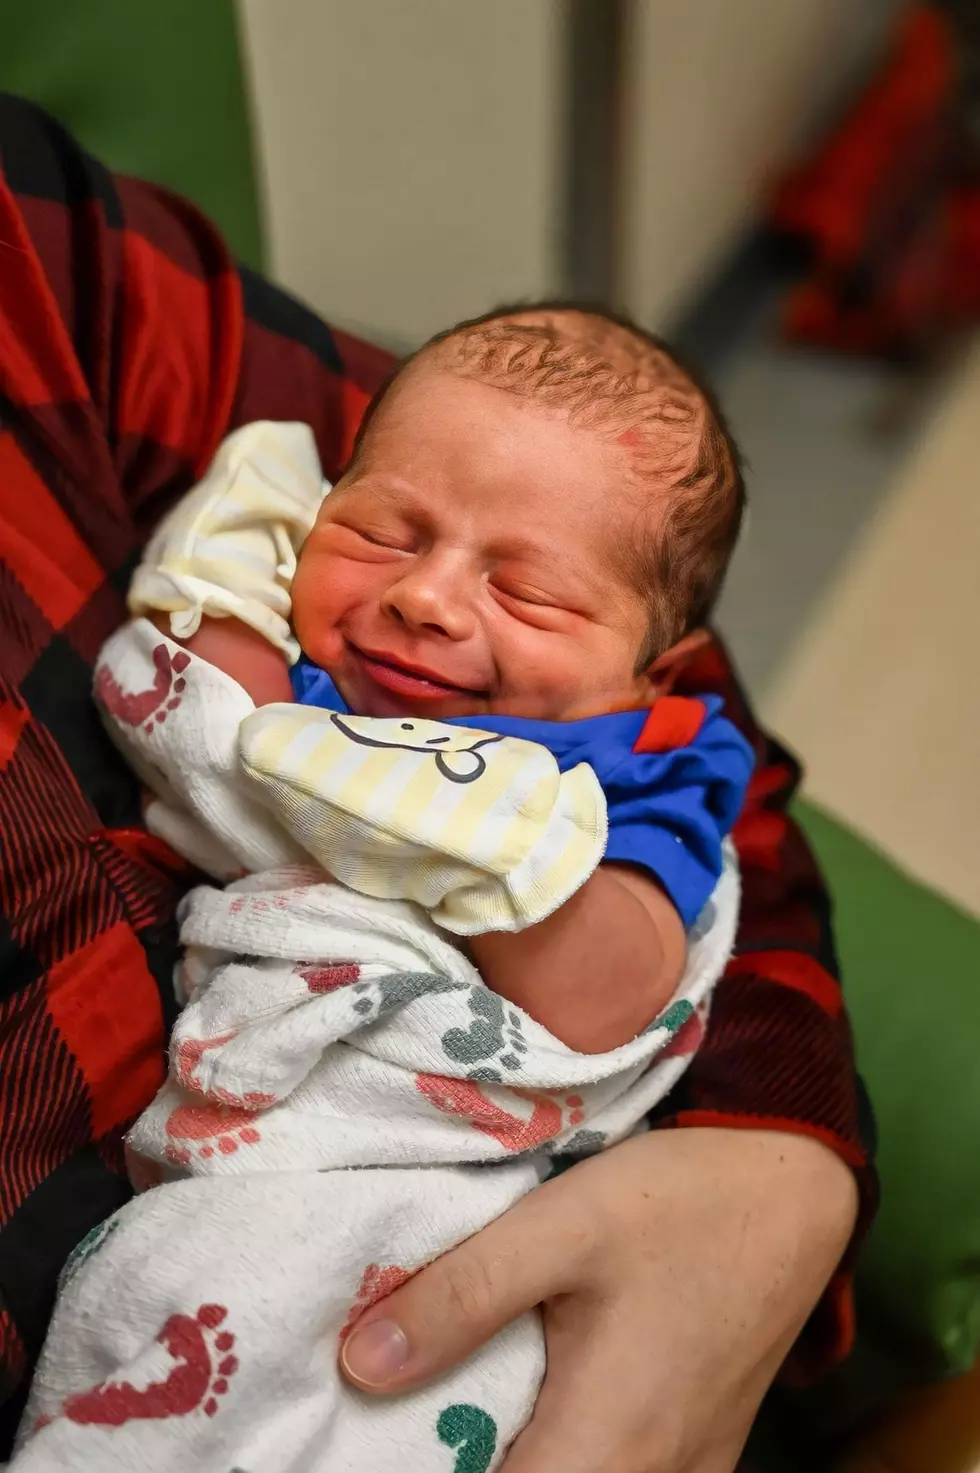 1st 2023 Baby Born at MDI Hospital is a Boy!